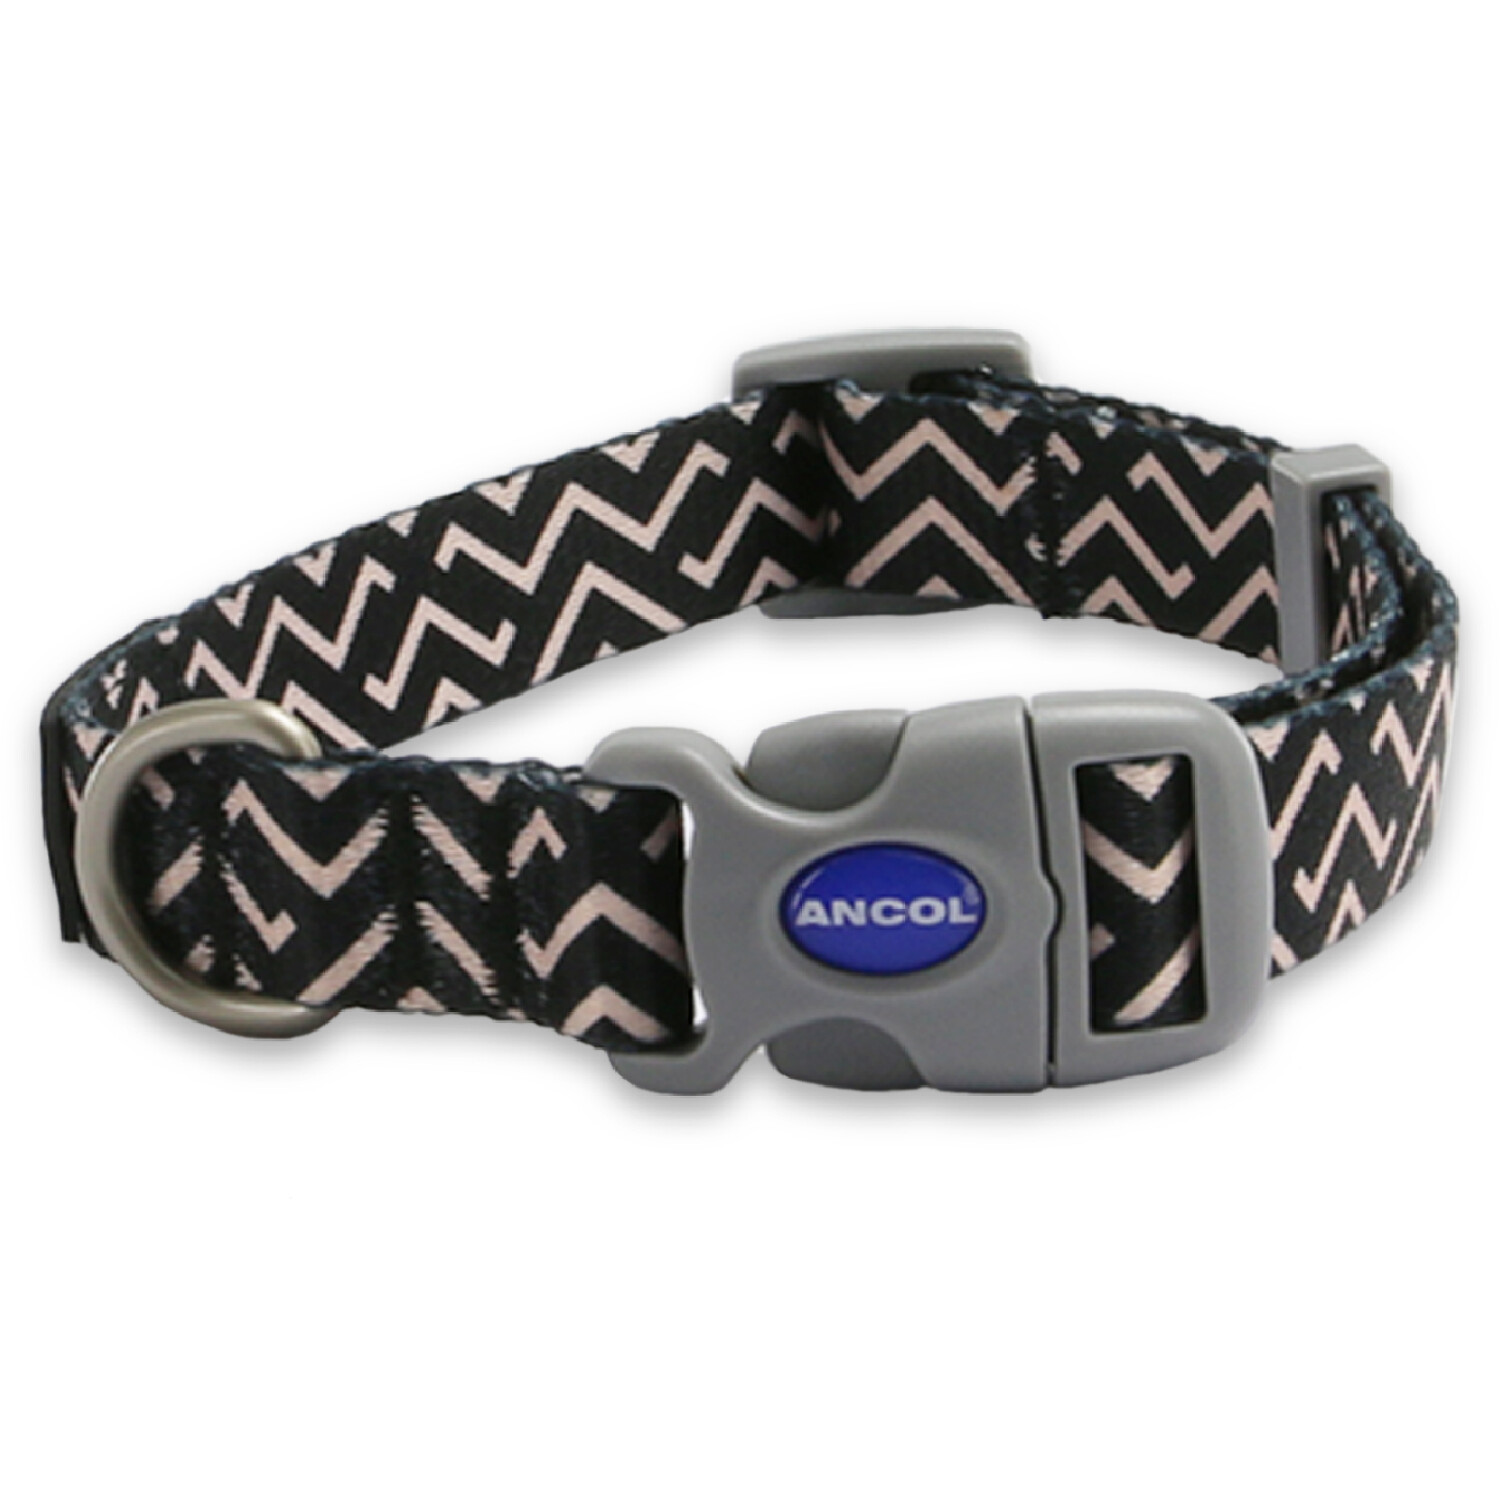 Zigzag Patterned Dog Collar - Black / 30 - 50cm Neck Image